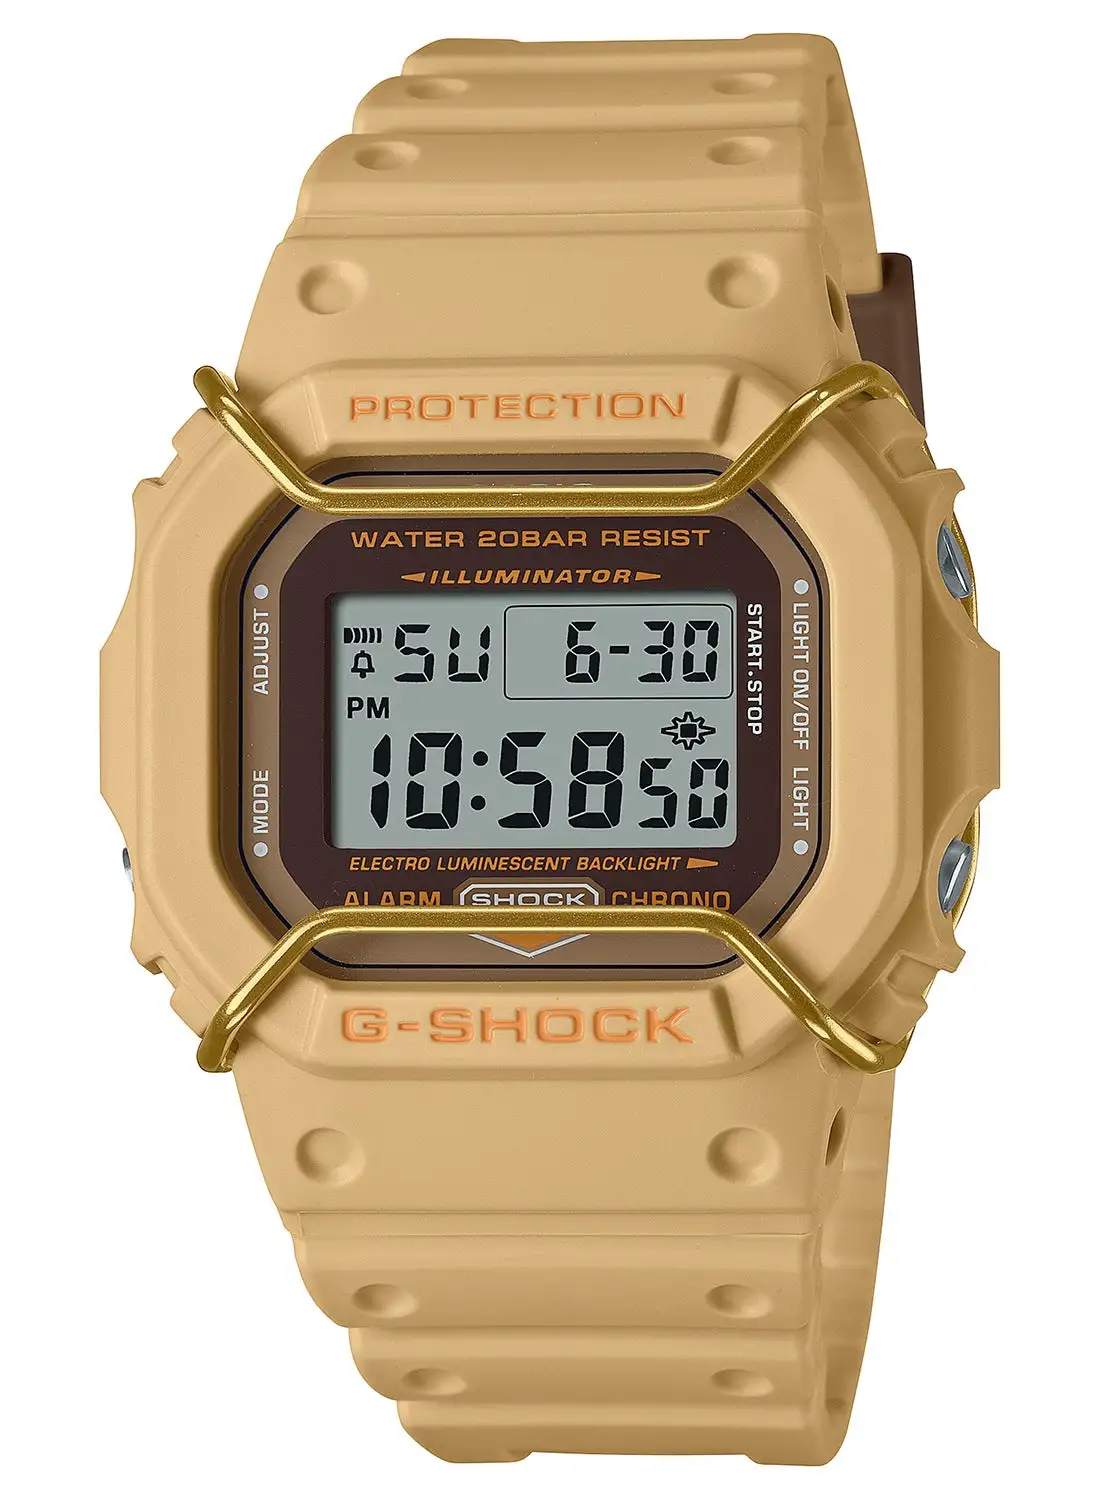 G-SHOCK Men's Digital Resin Wrist Watch DW-5600PT-5DR - 40 Mm